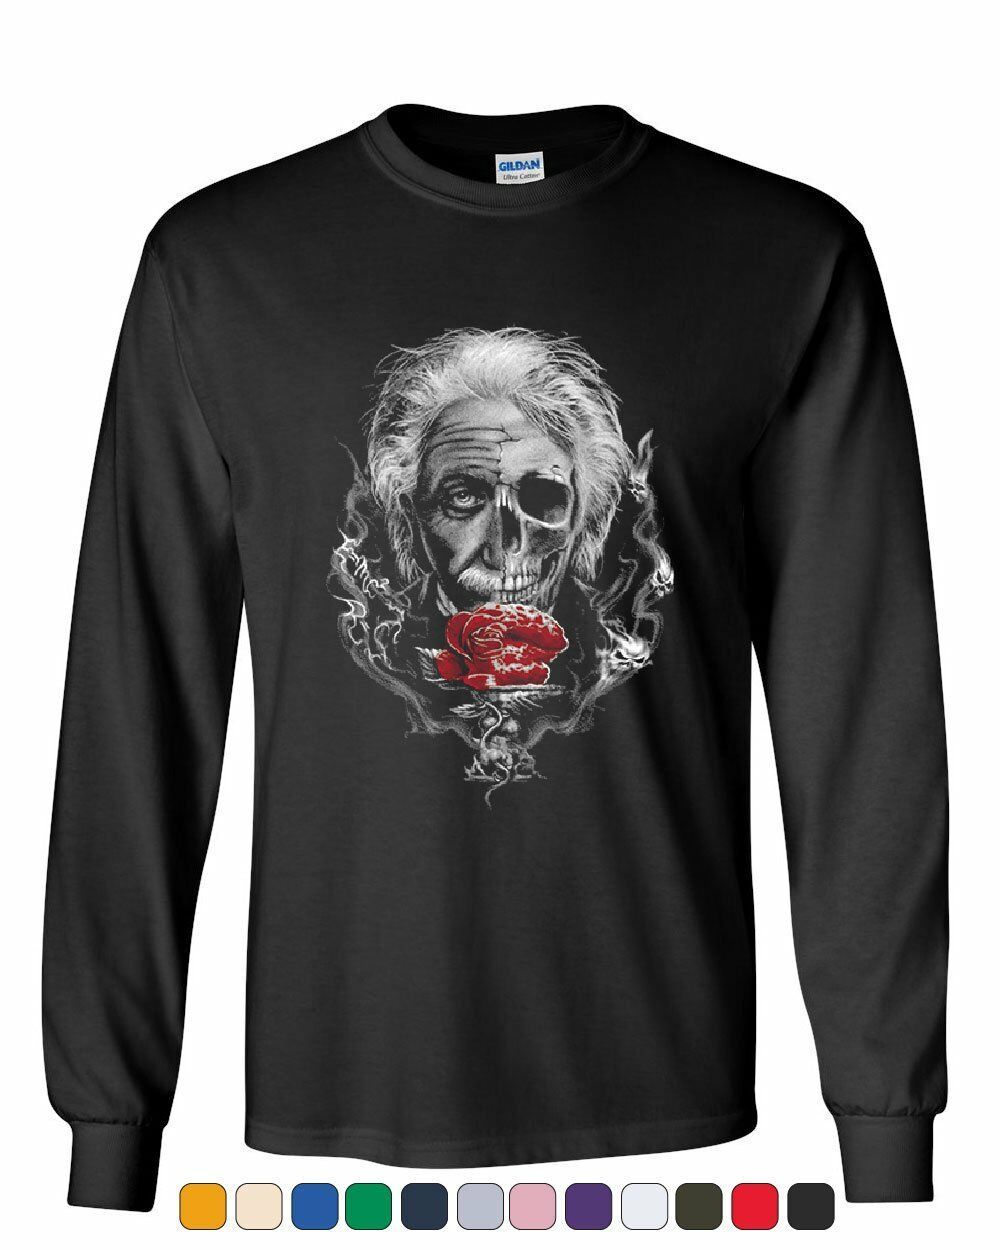 Albert Einstein Skull Face Long Sleeve T-Shirt Urban Rose Genius Scientist Tee